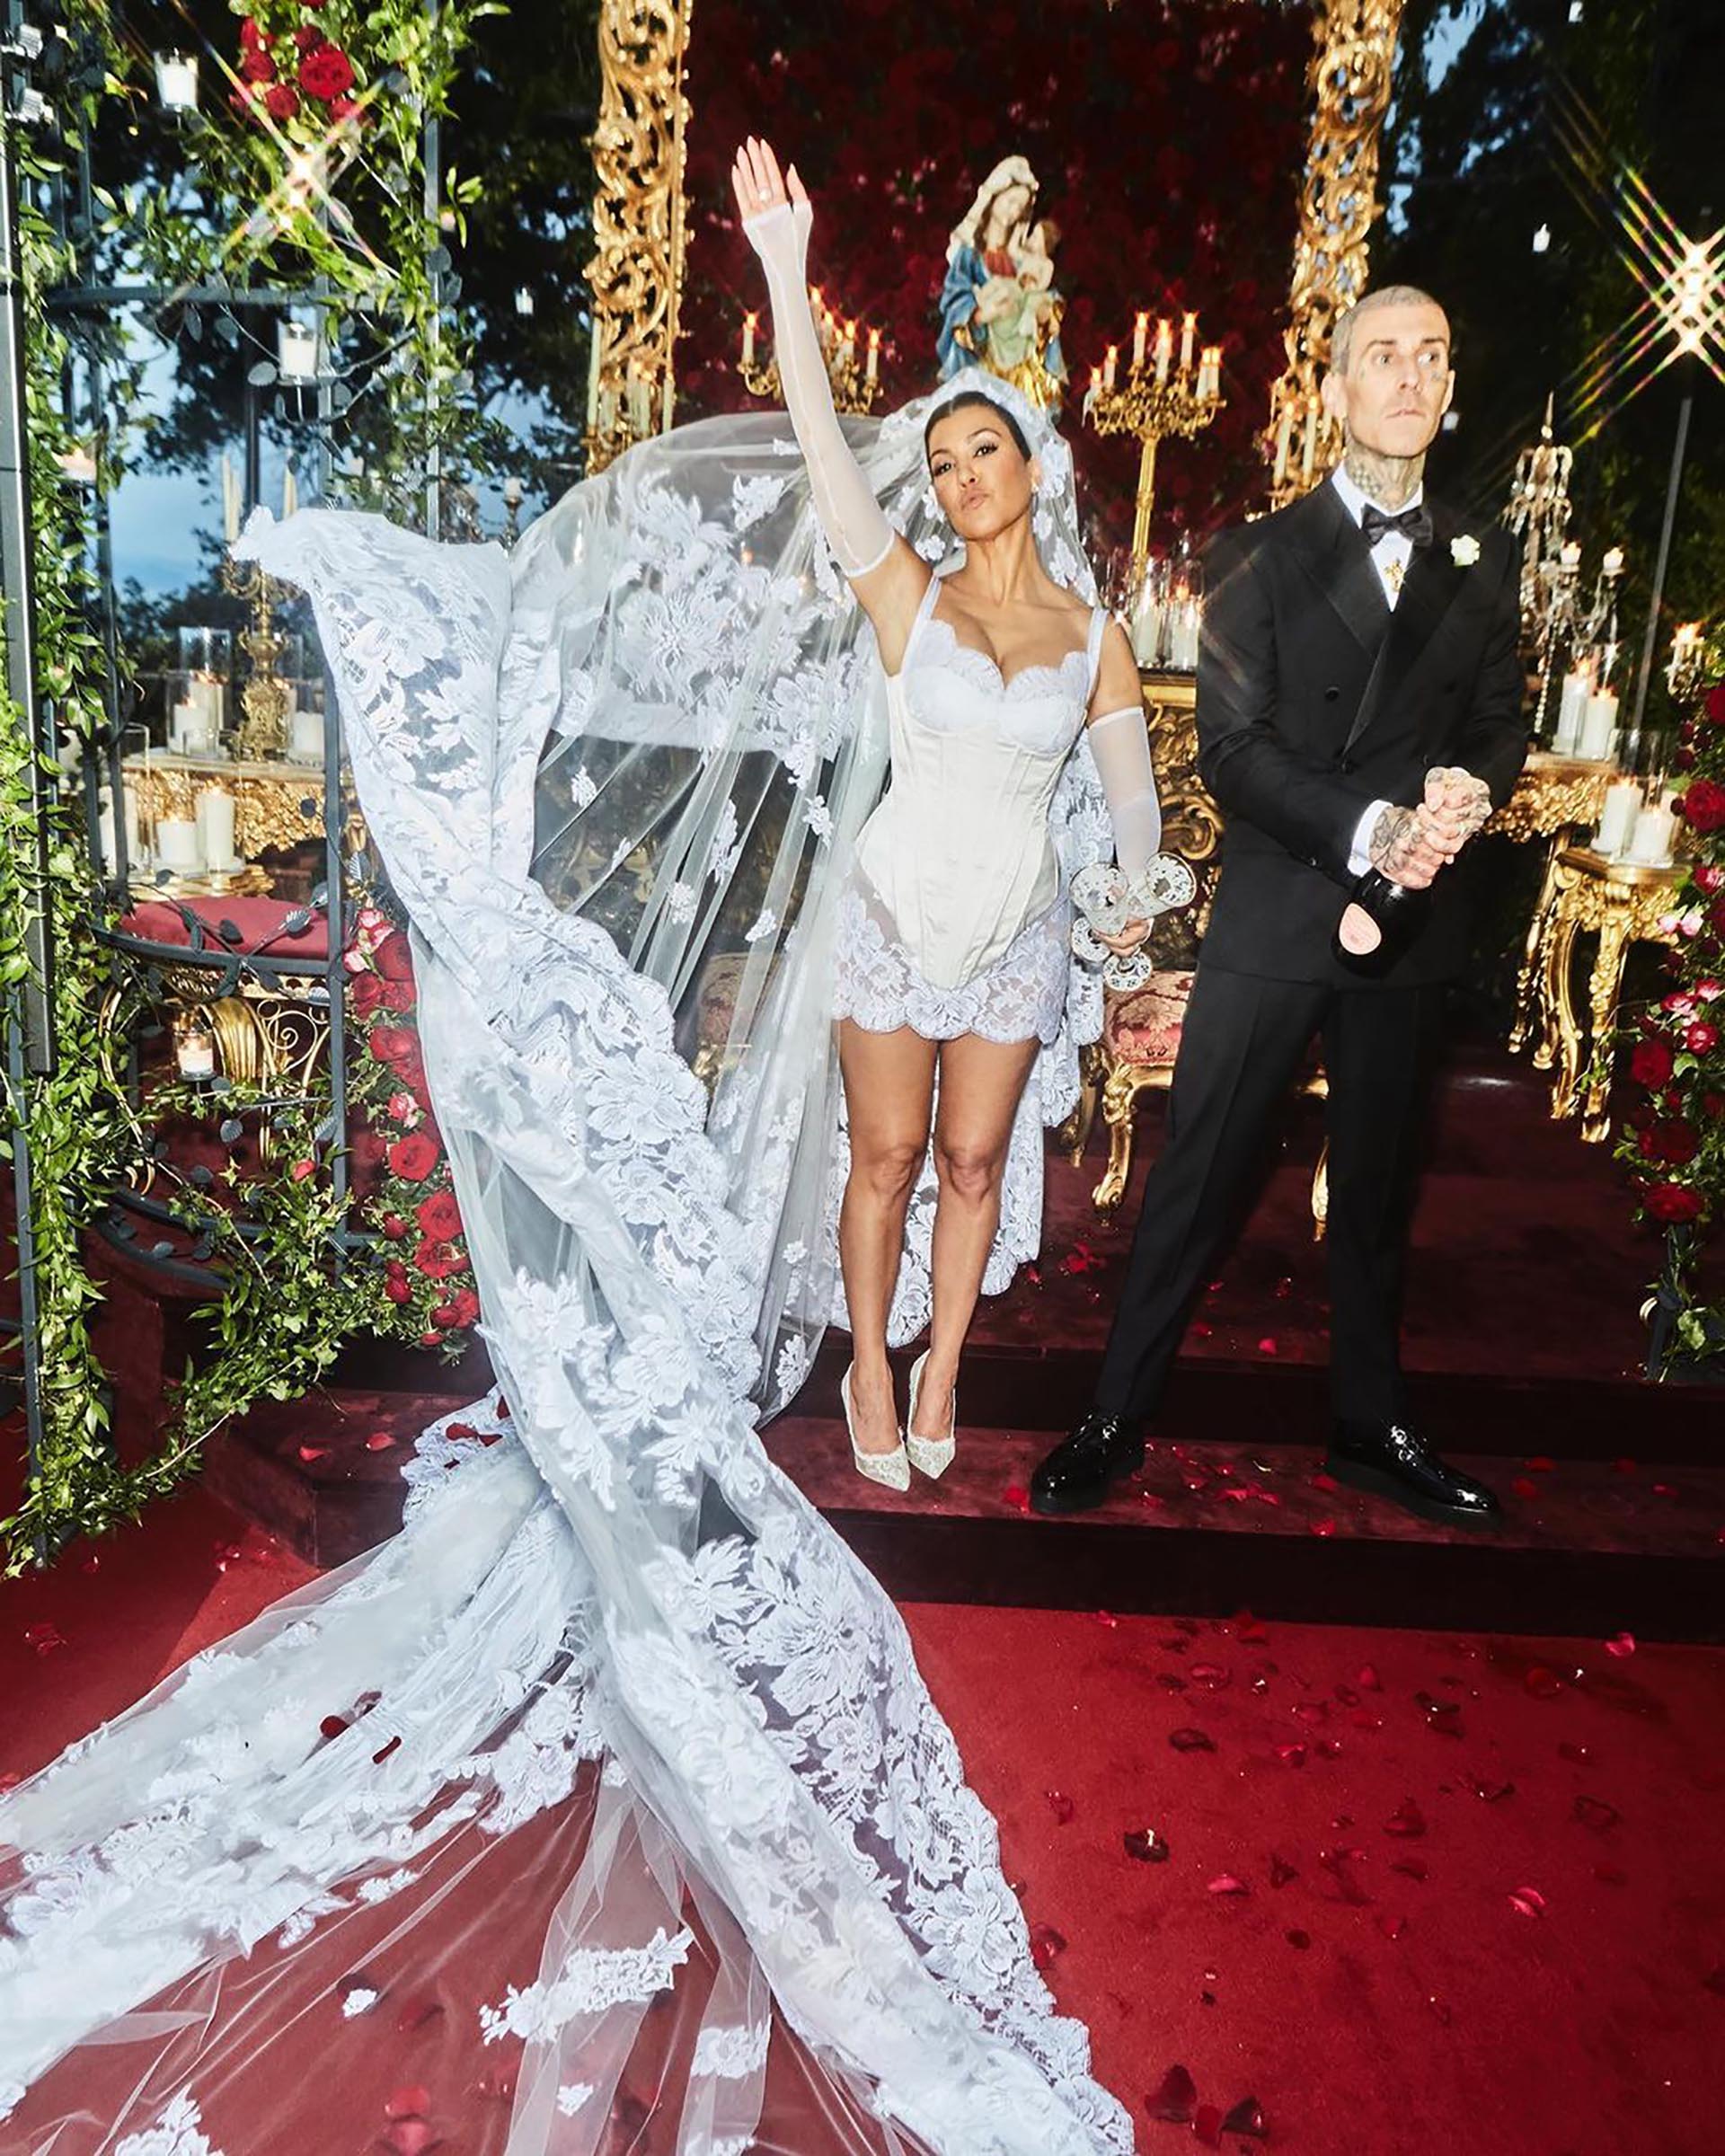 The bride and groom dressed as Dolce & Gabbana.  (@kourtneykardash)